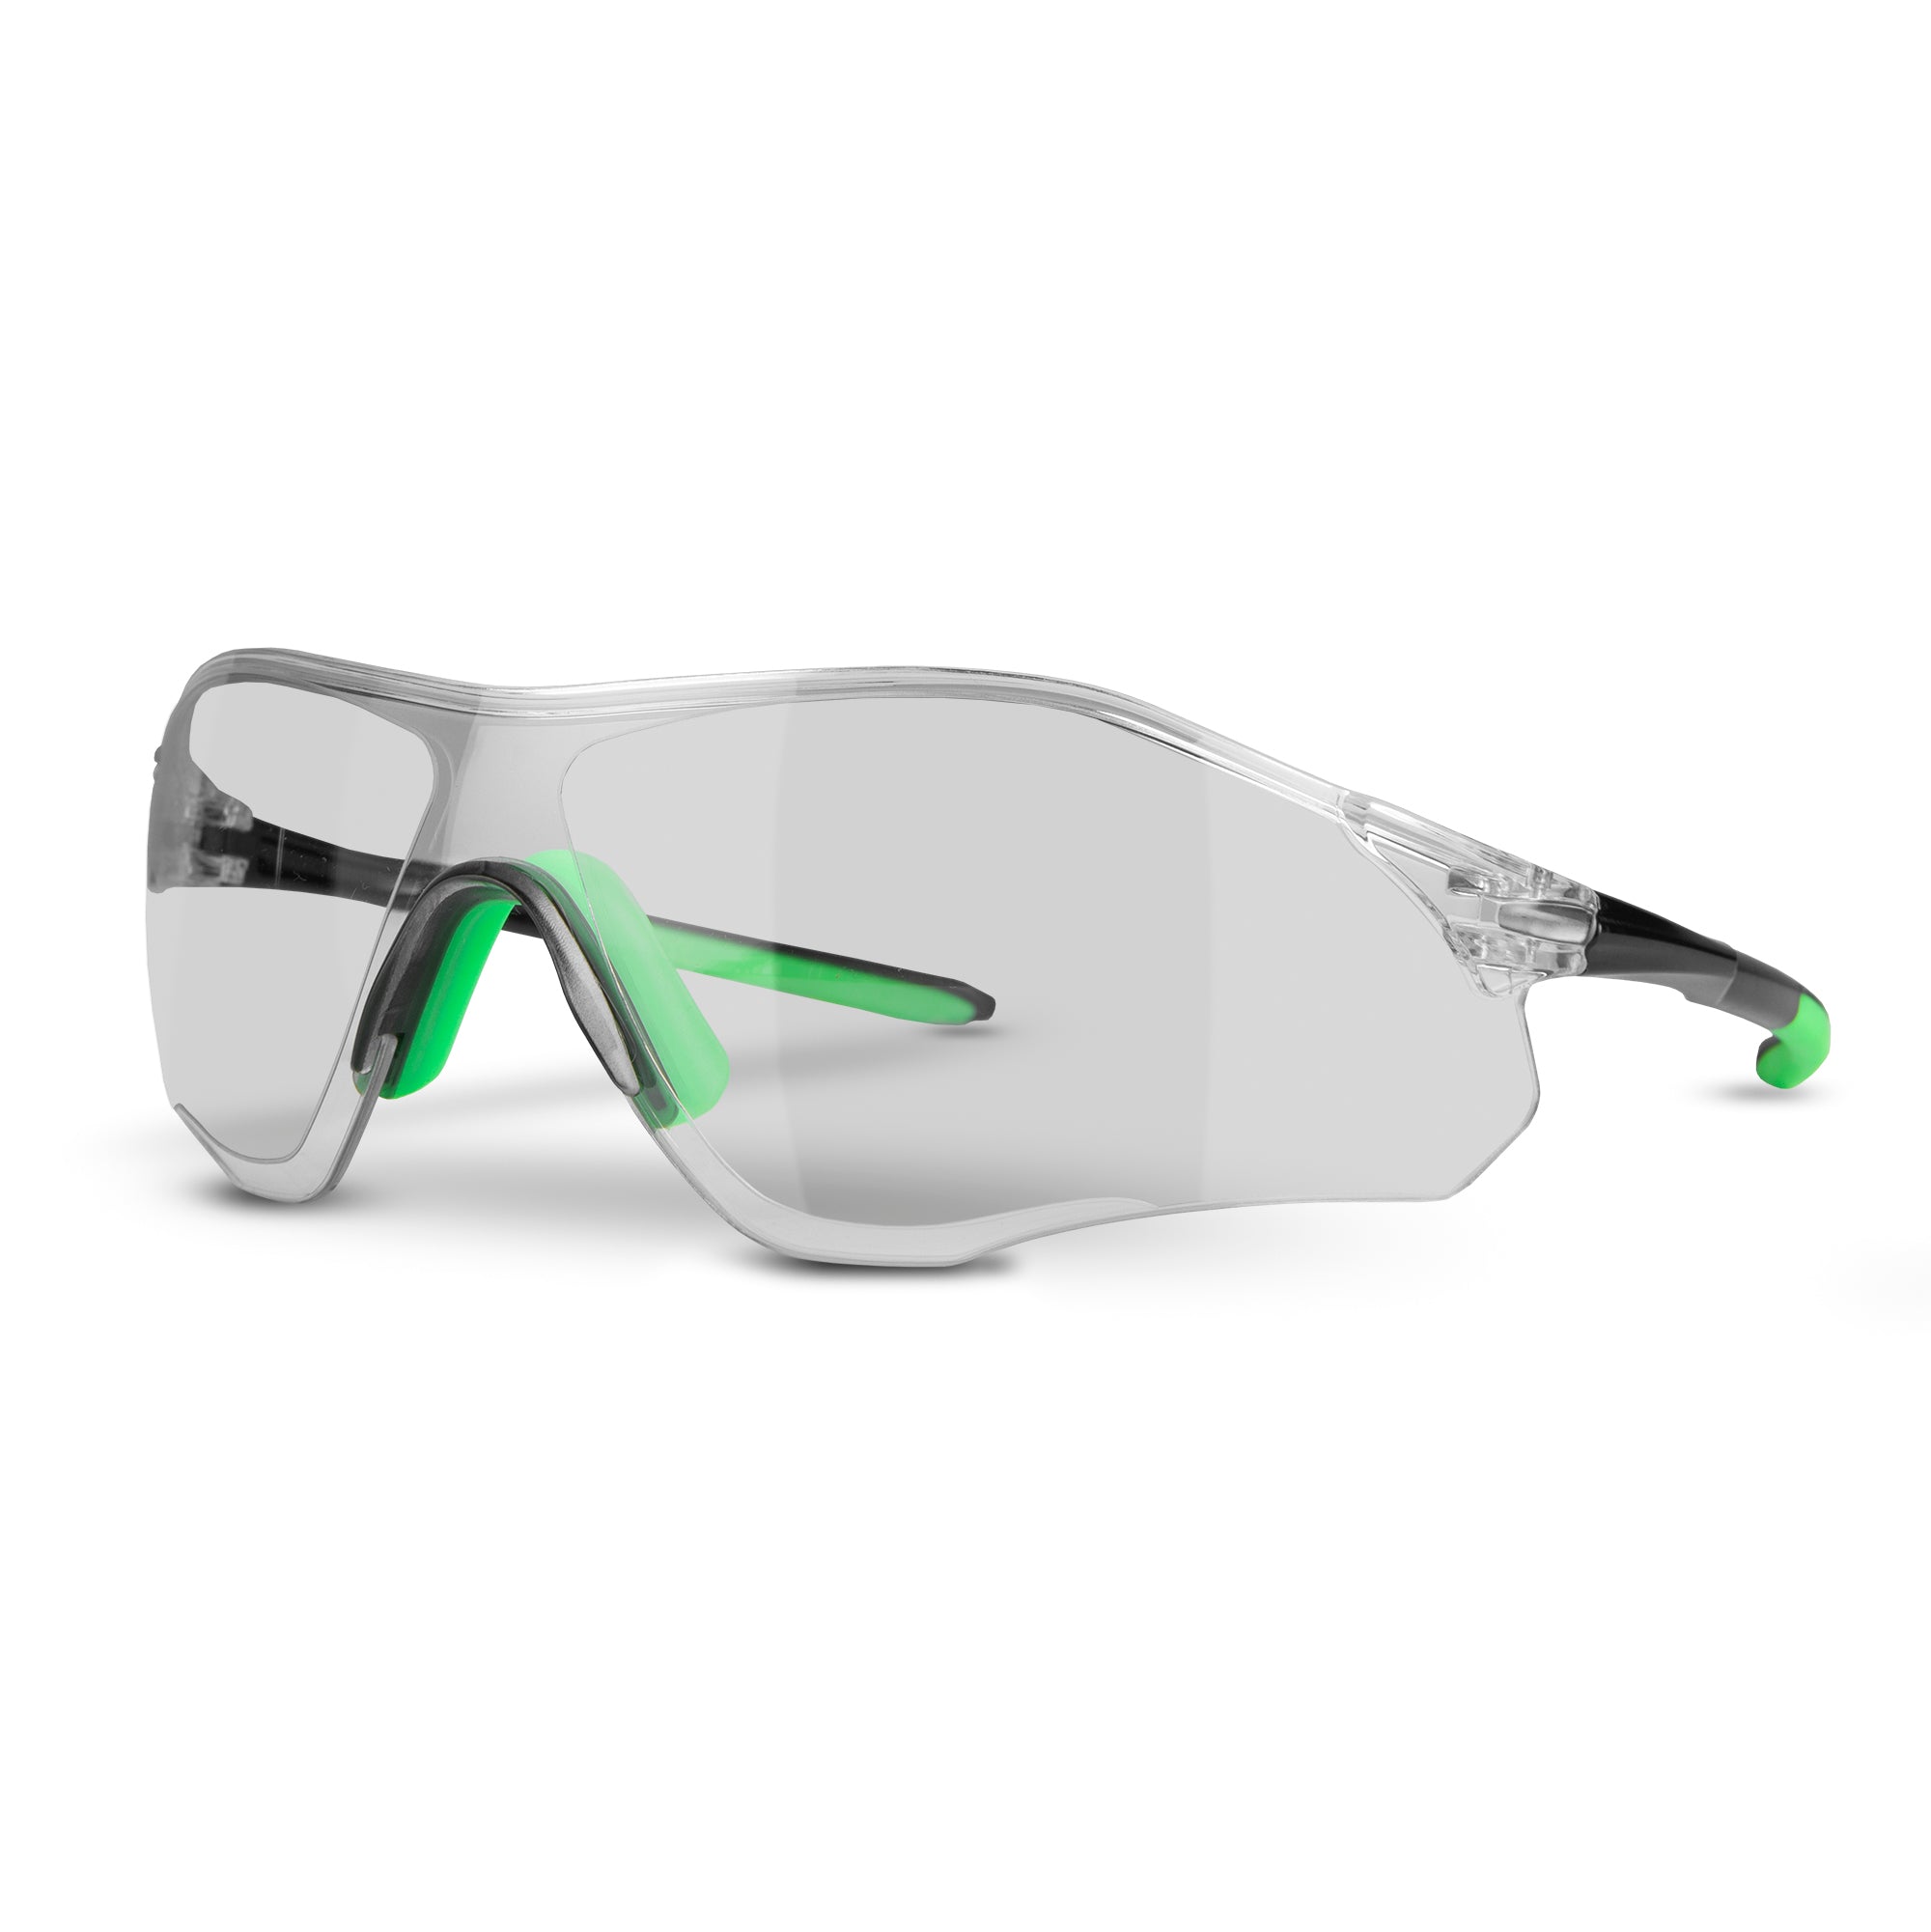 Phalanx Safety Glasses - LIFT Safety